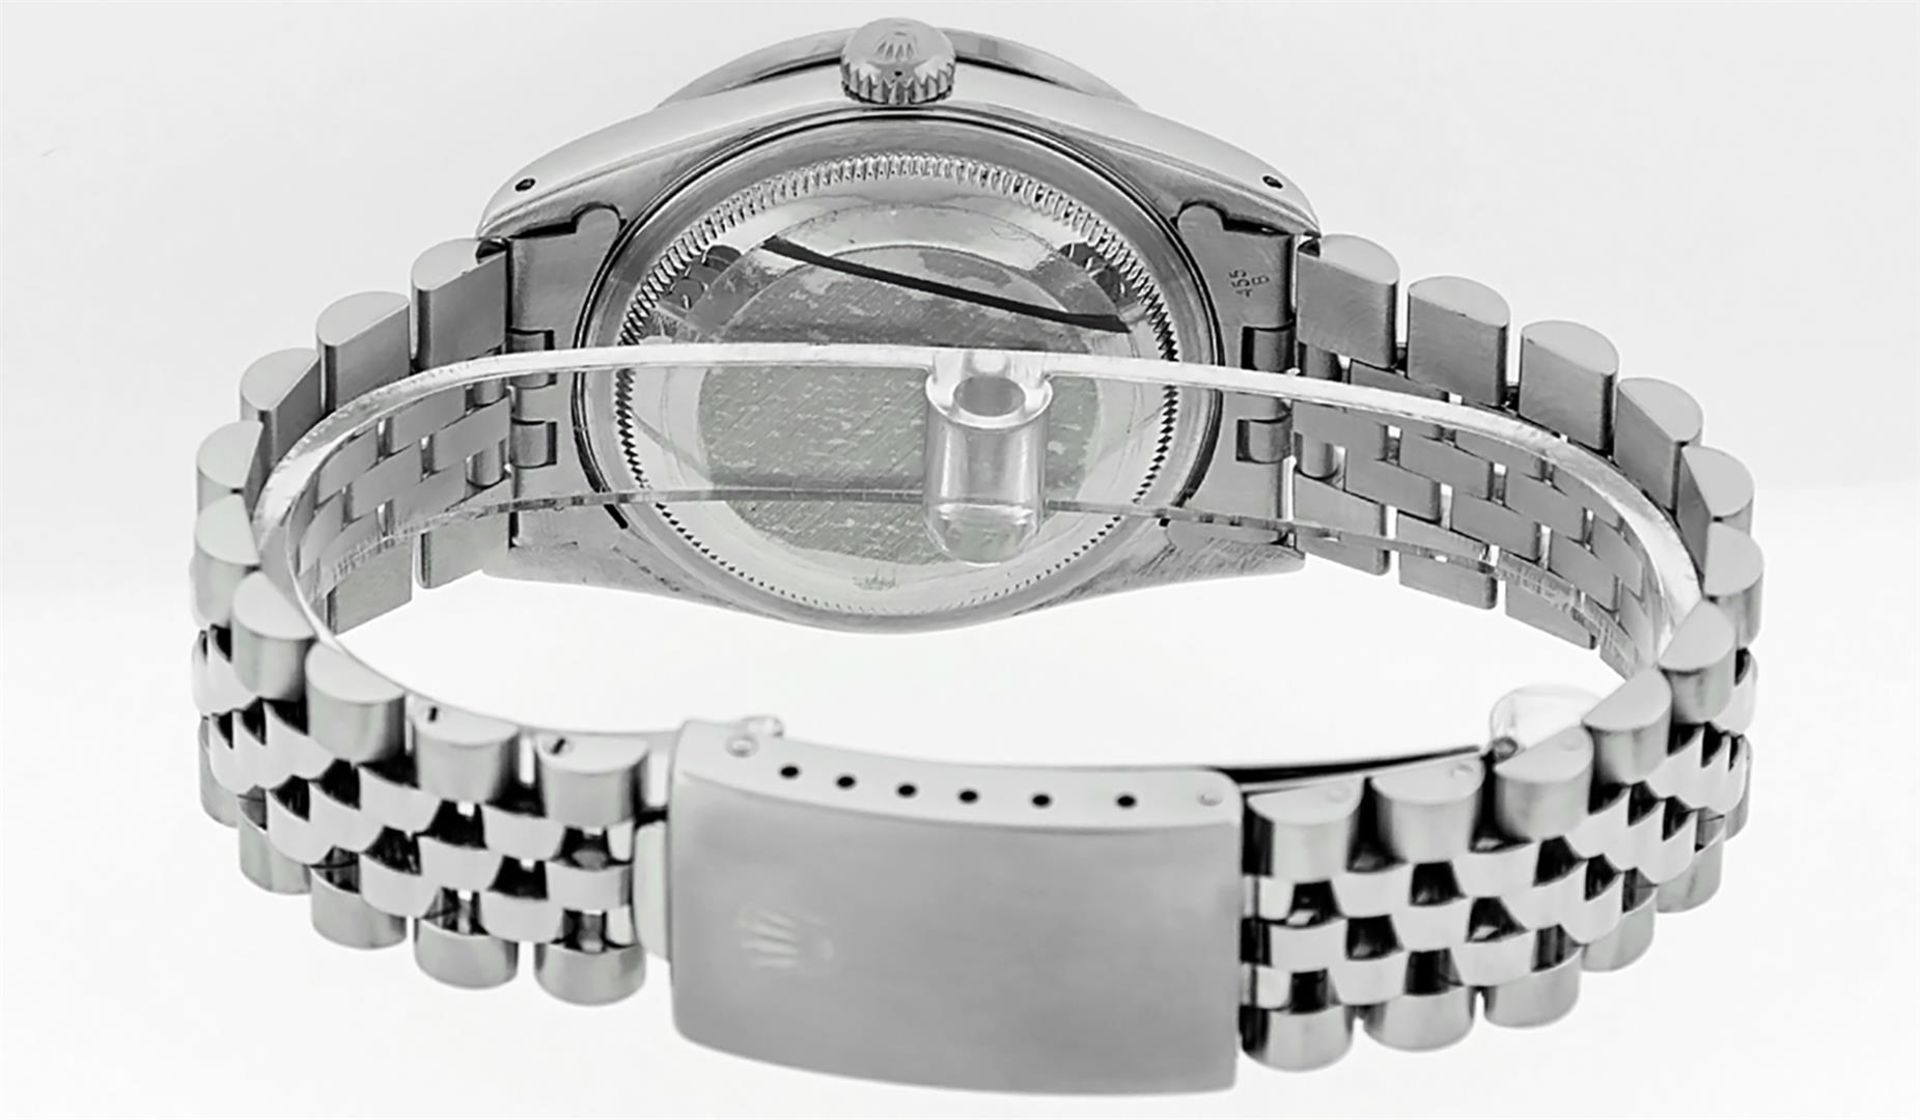 Rolex Mens Stainless Steel Diamond Lugs & Pyramid Bezel Datejust Wristwatch - Image 5 of 8